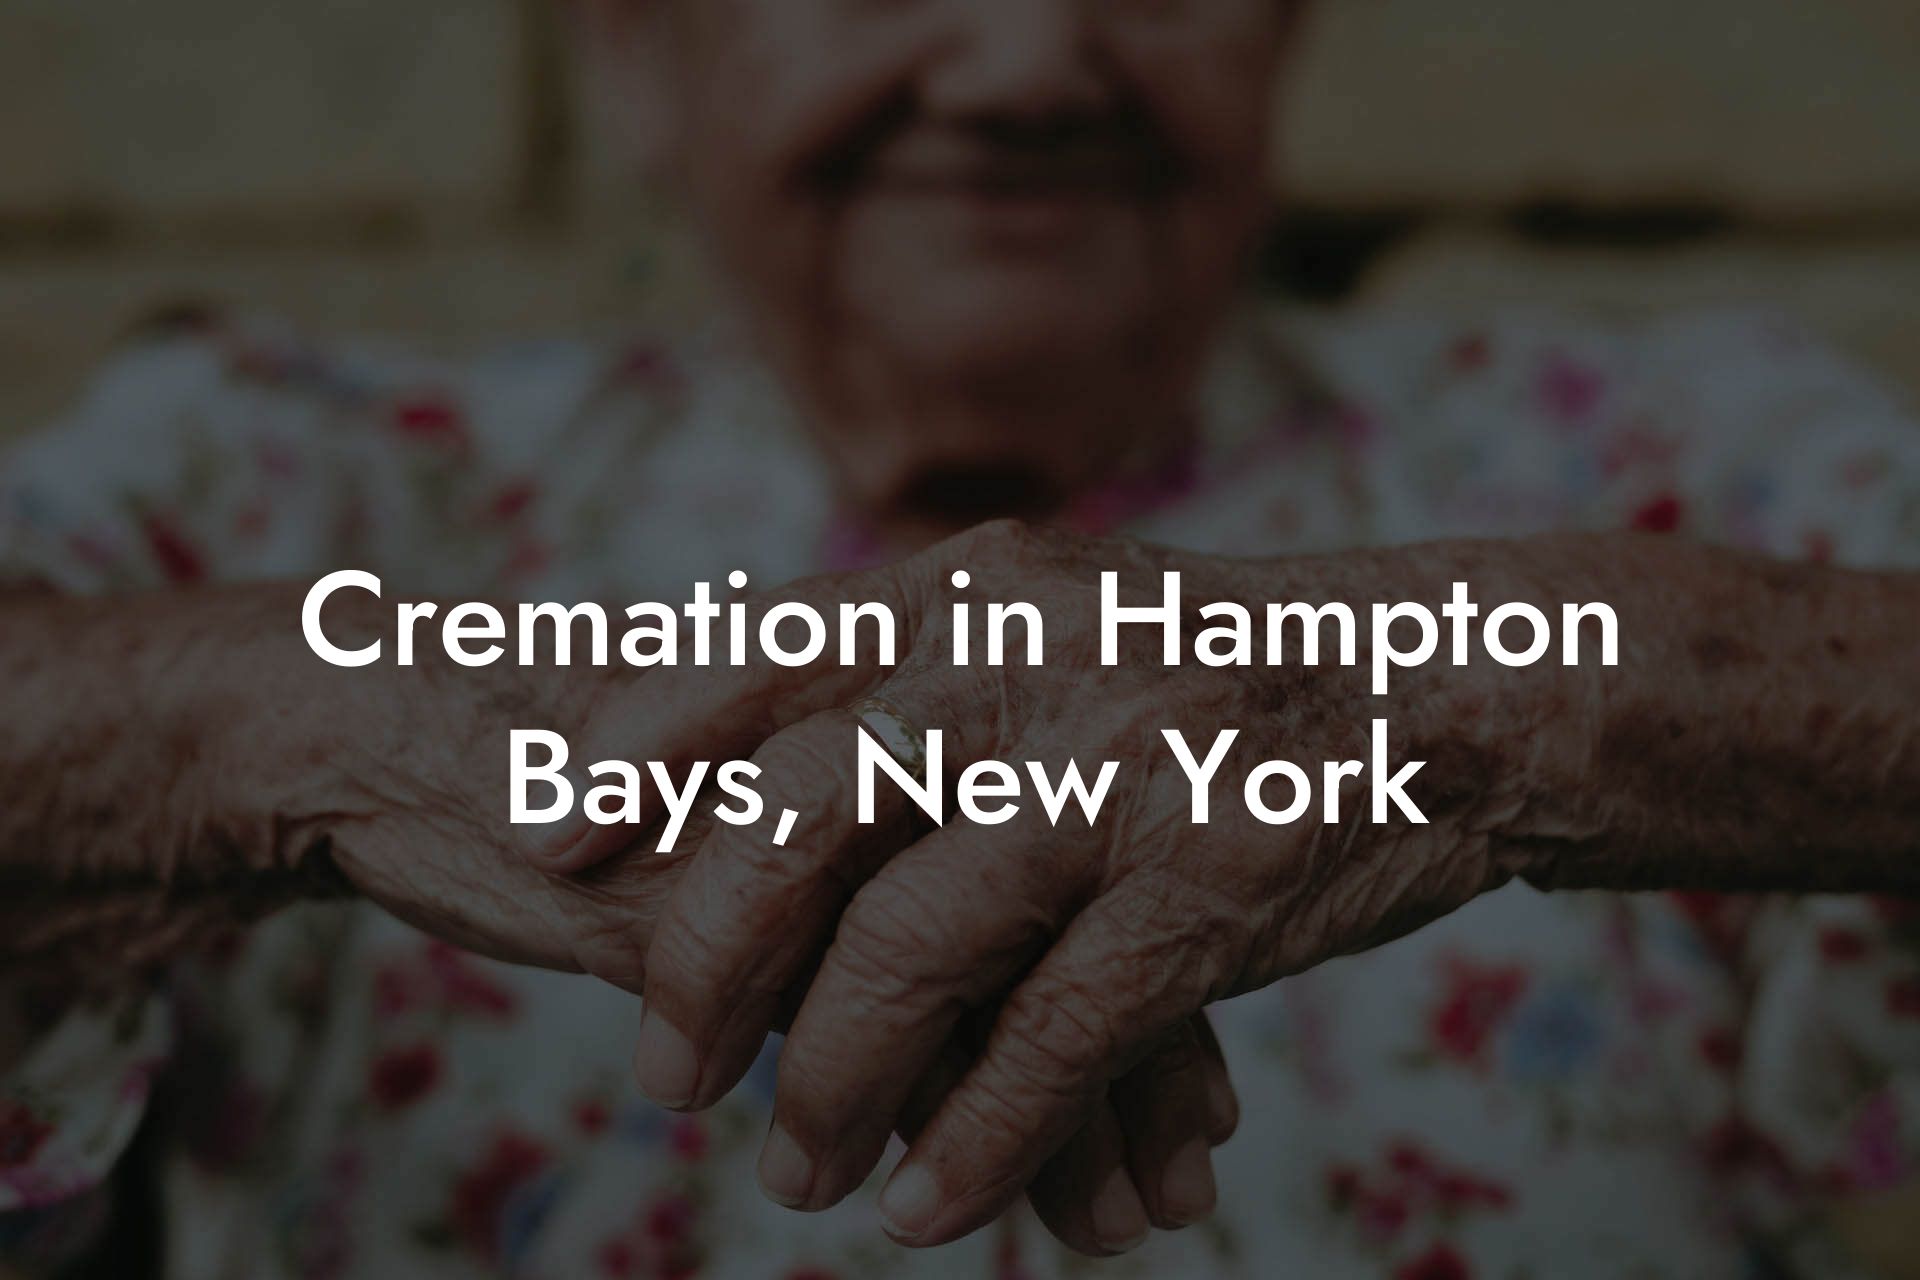 Cremation in Hampton Bays, New York